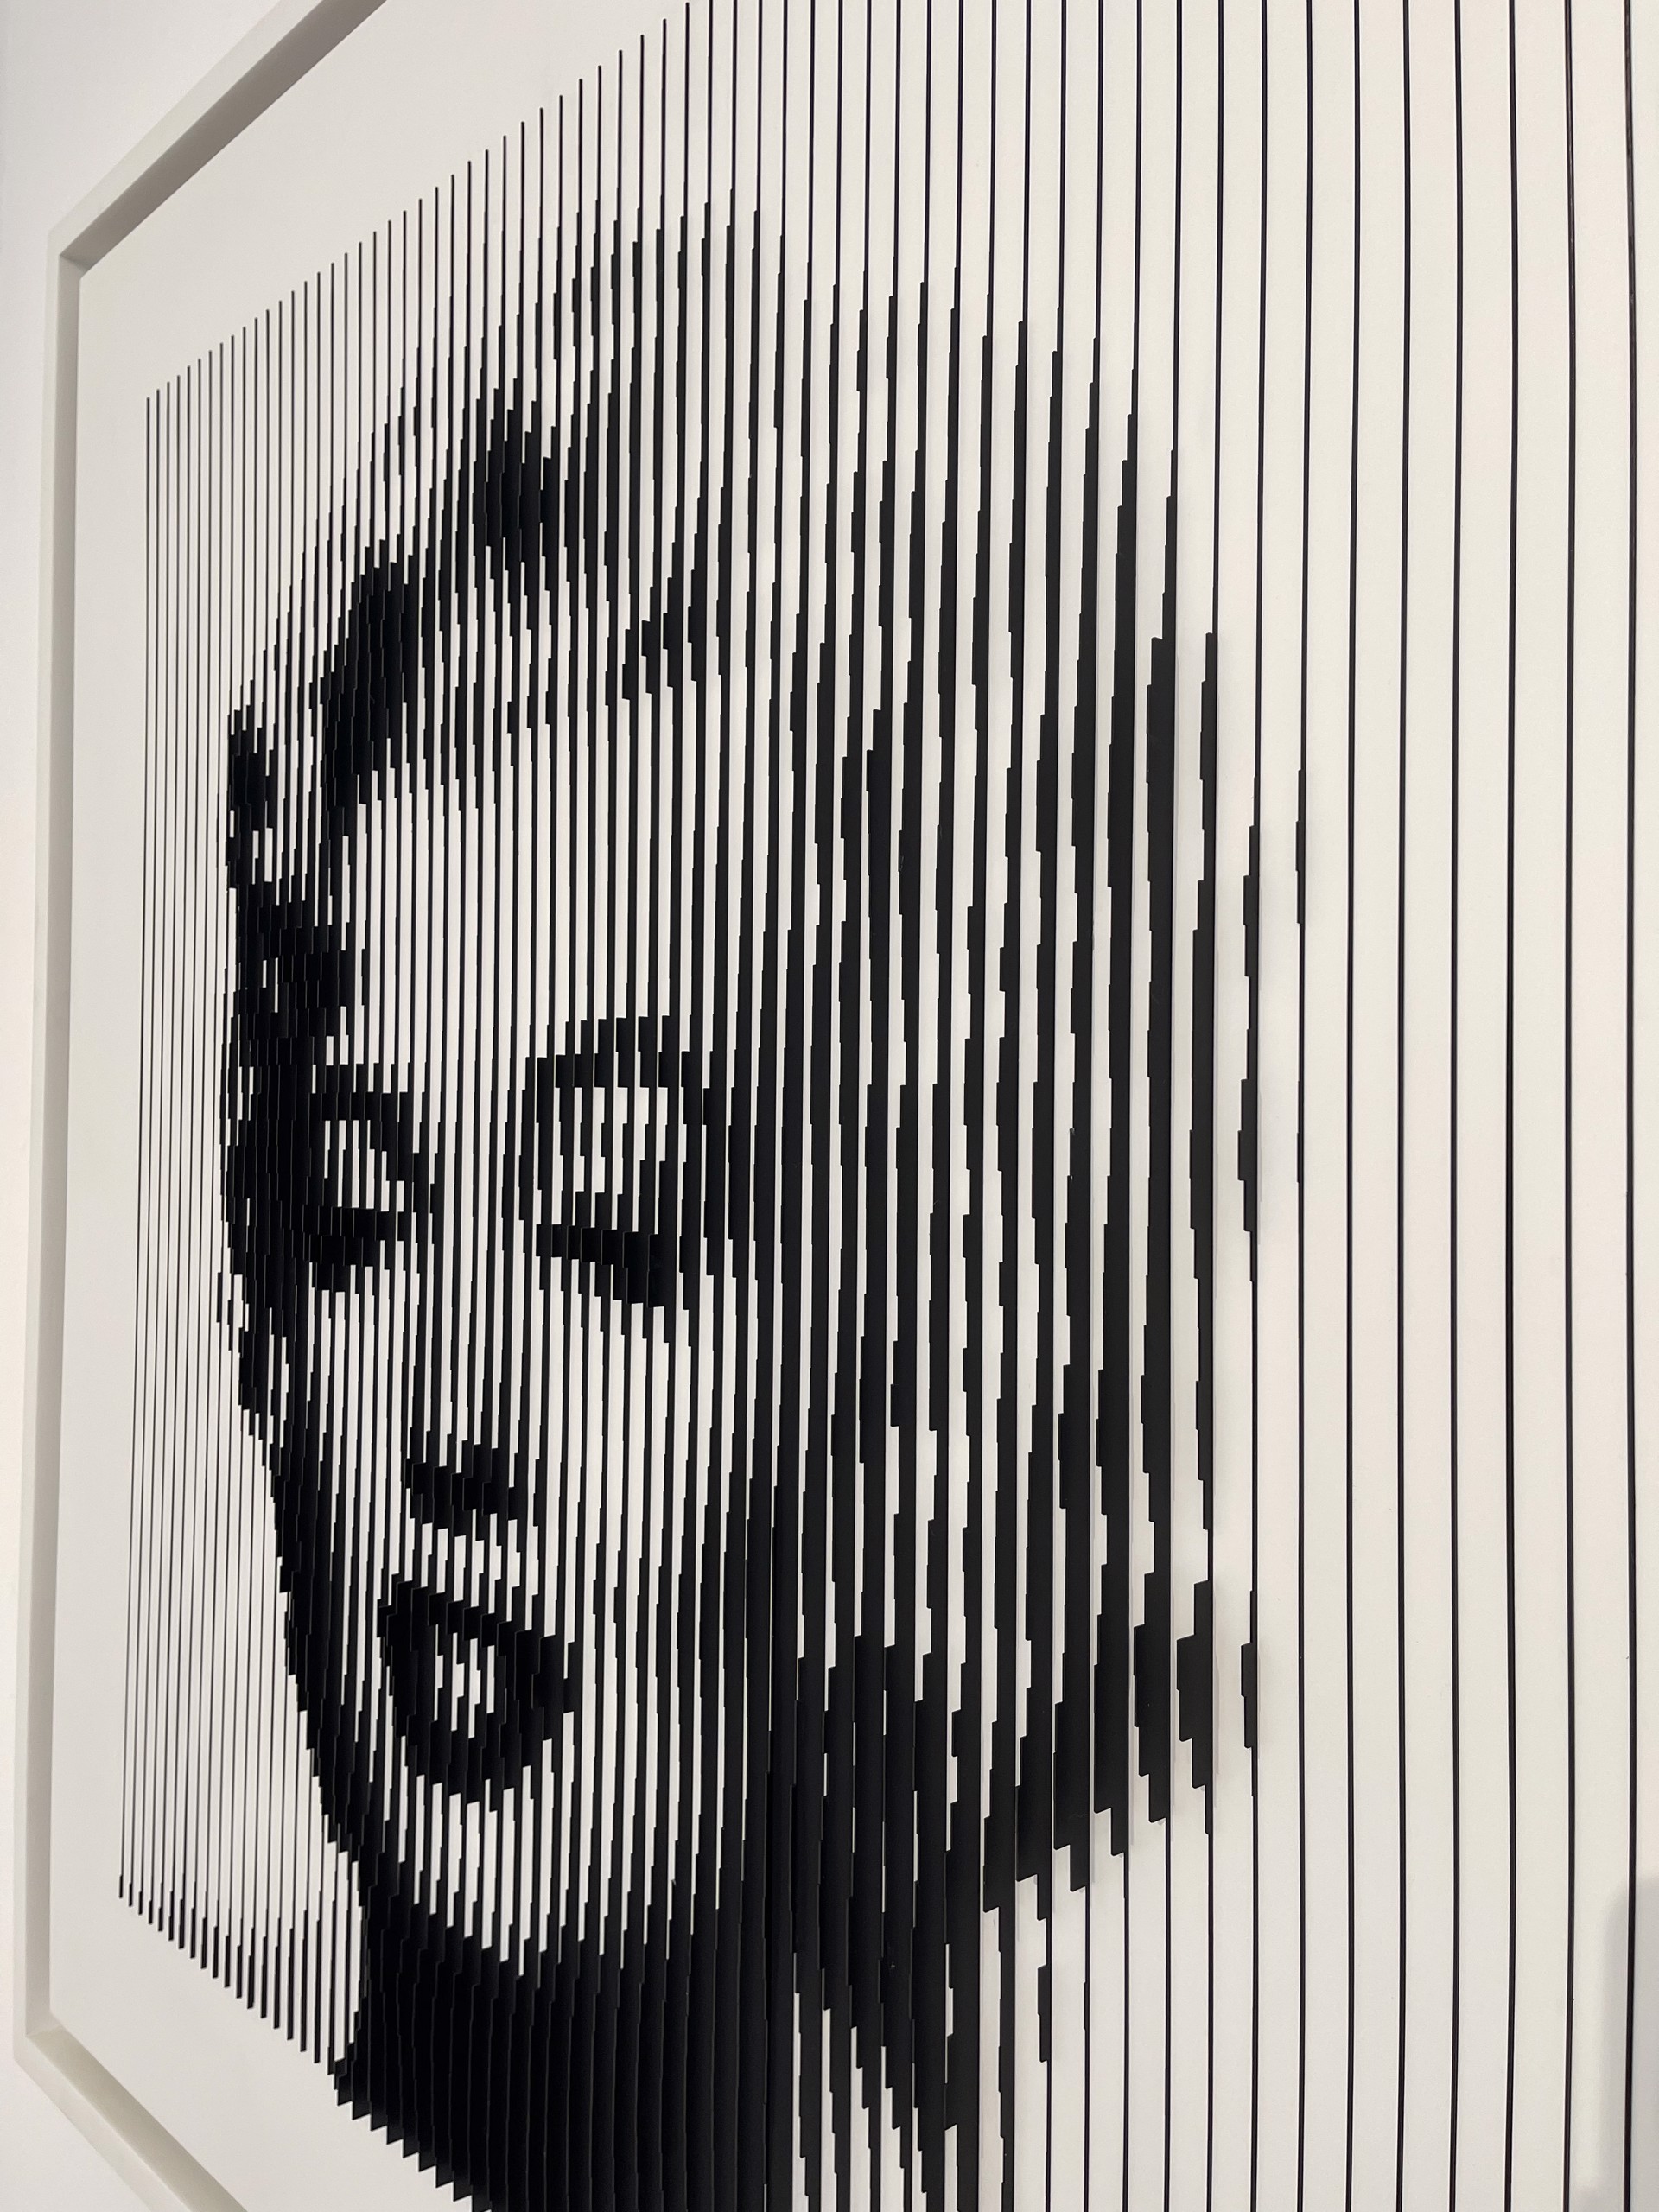 Marilyn Monroe by Pablo Tamayo